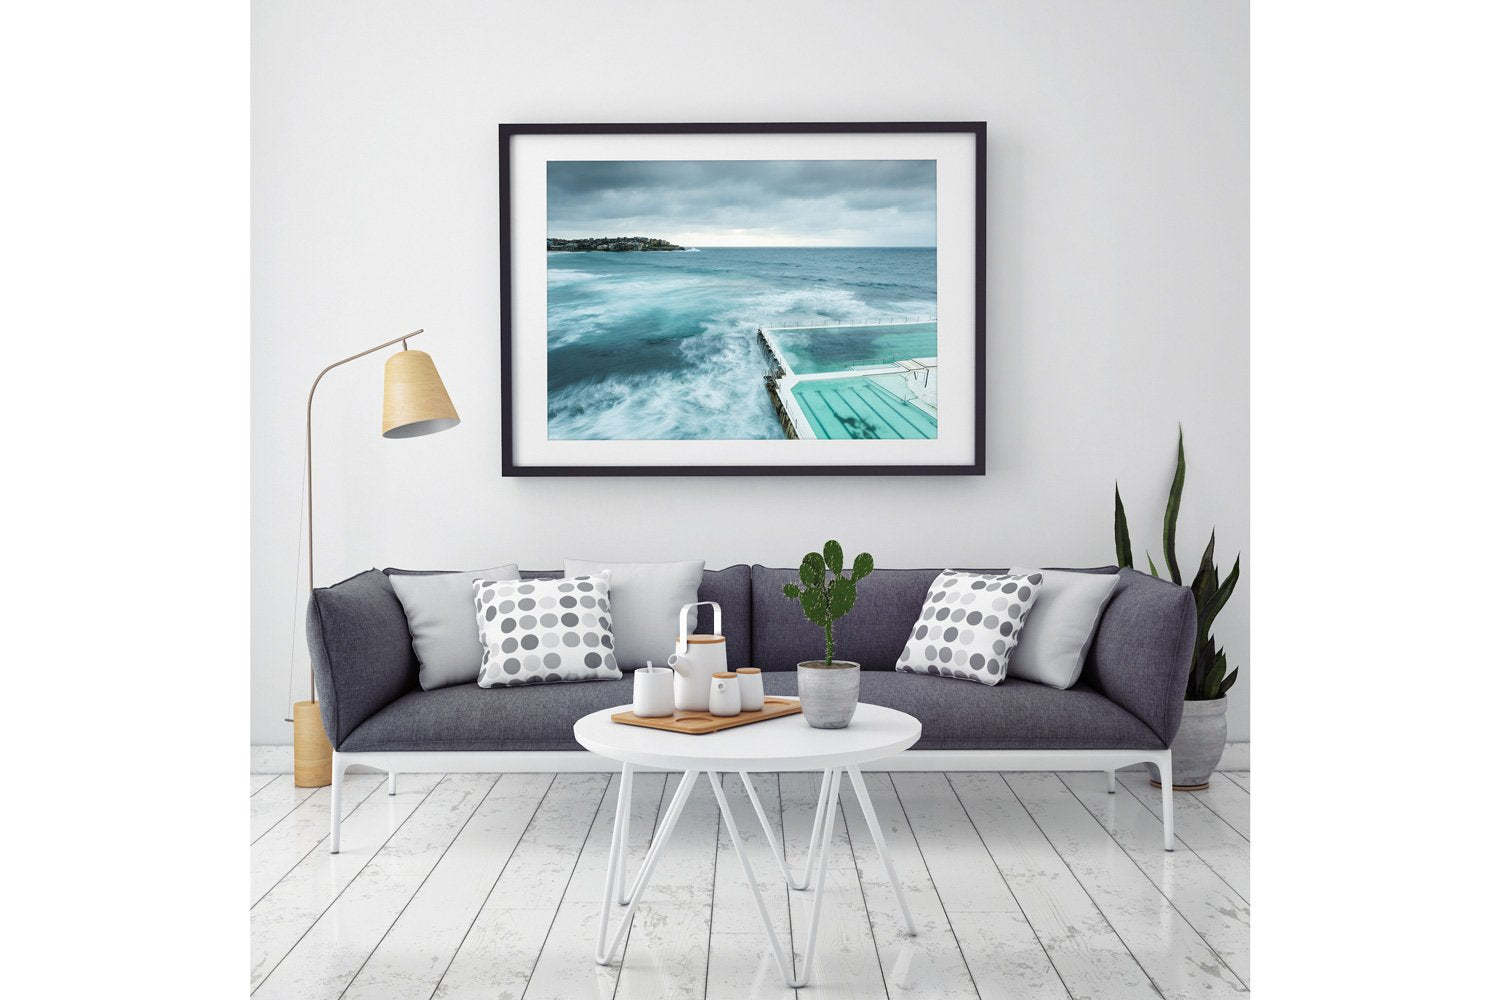 Bondi Beach Wall Art Beach styled interior